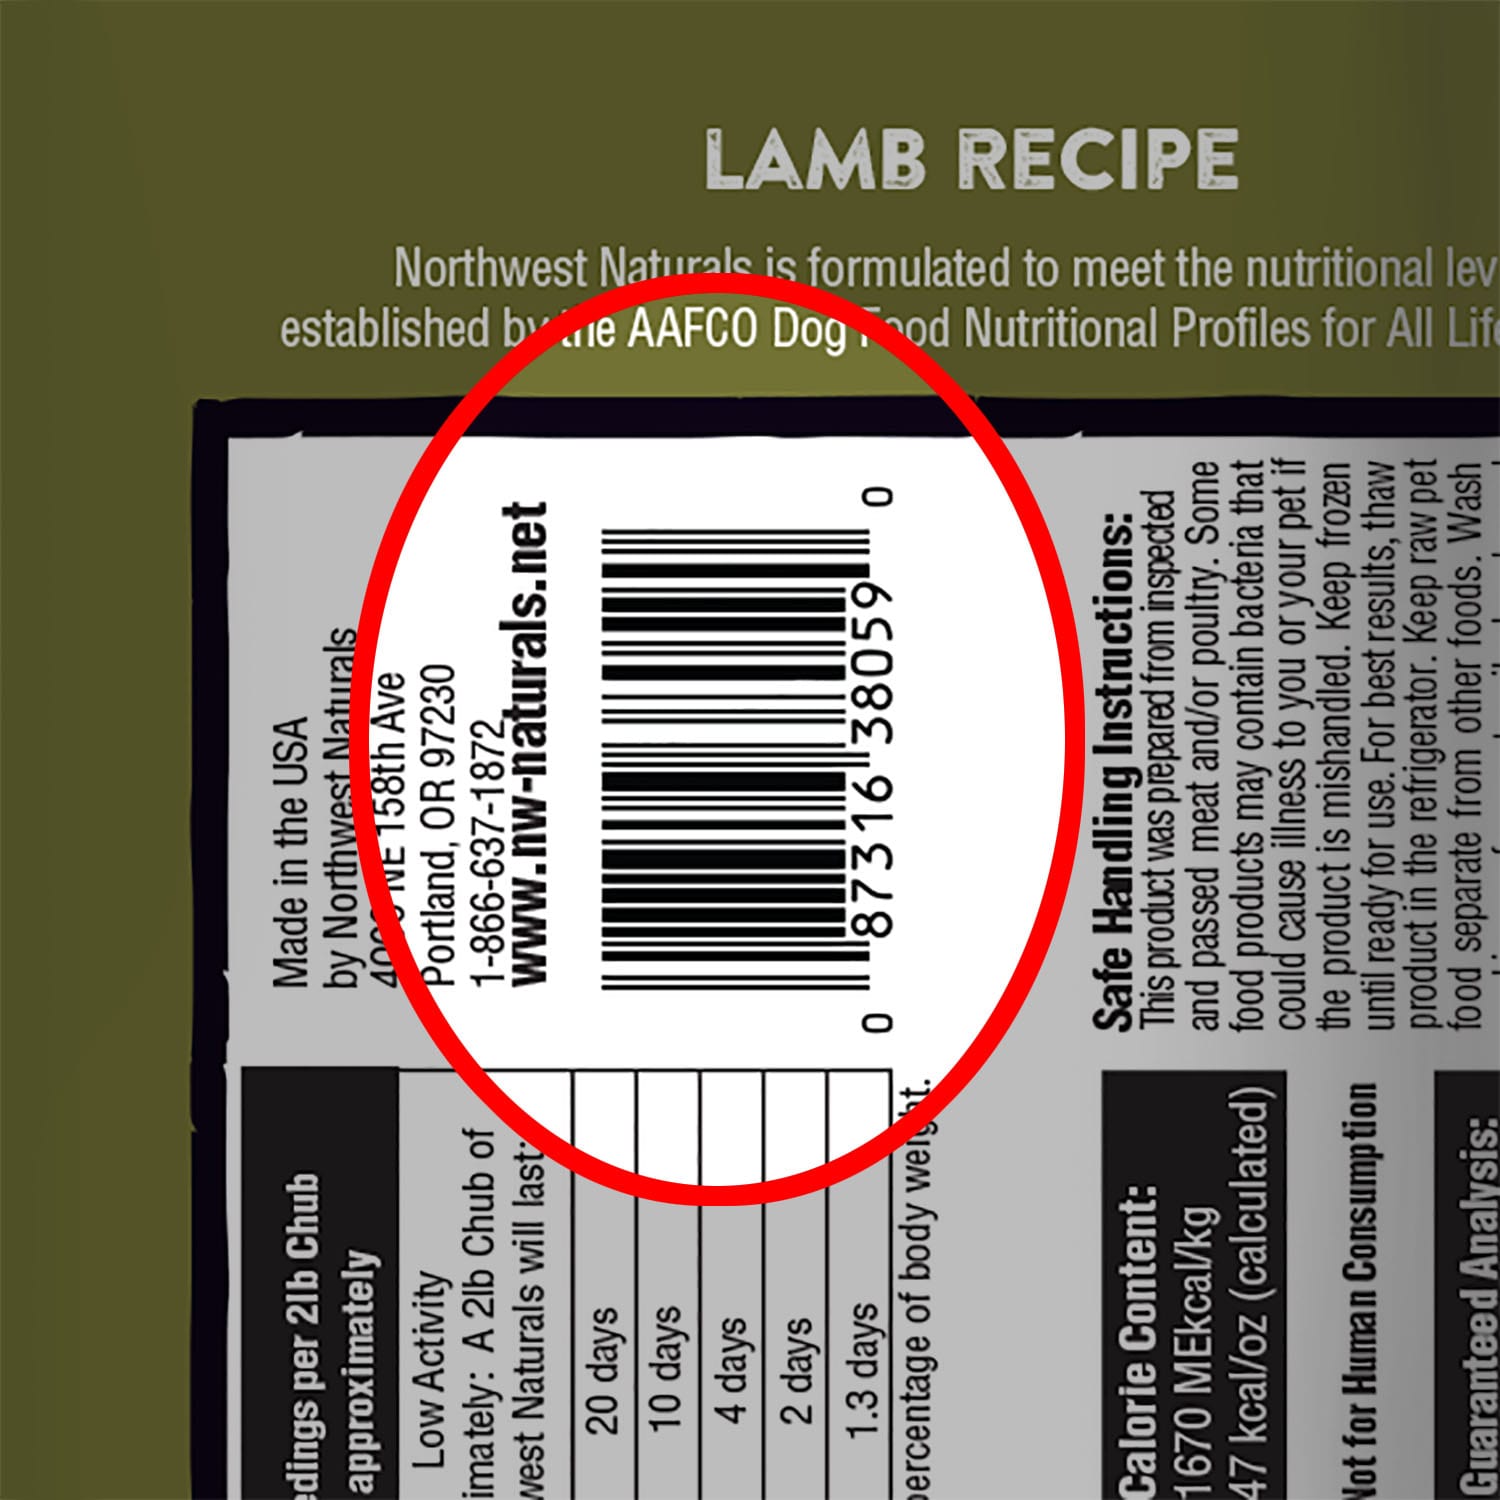 Lamb recipe "UPC code" location